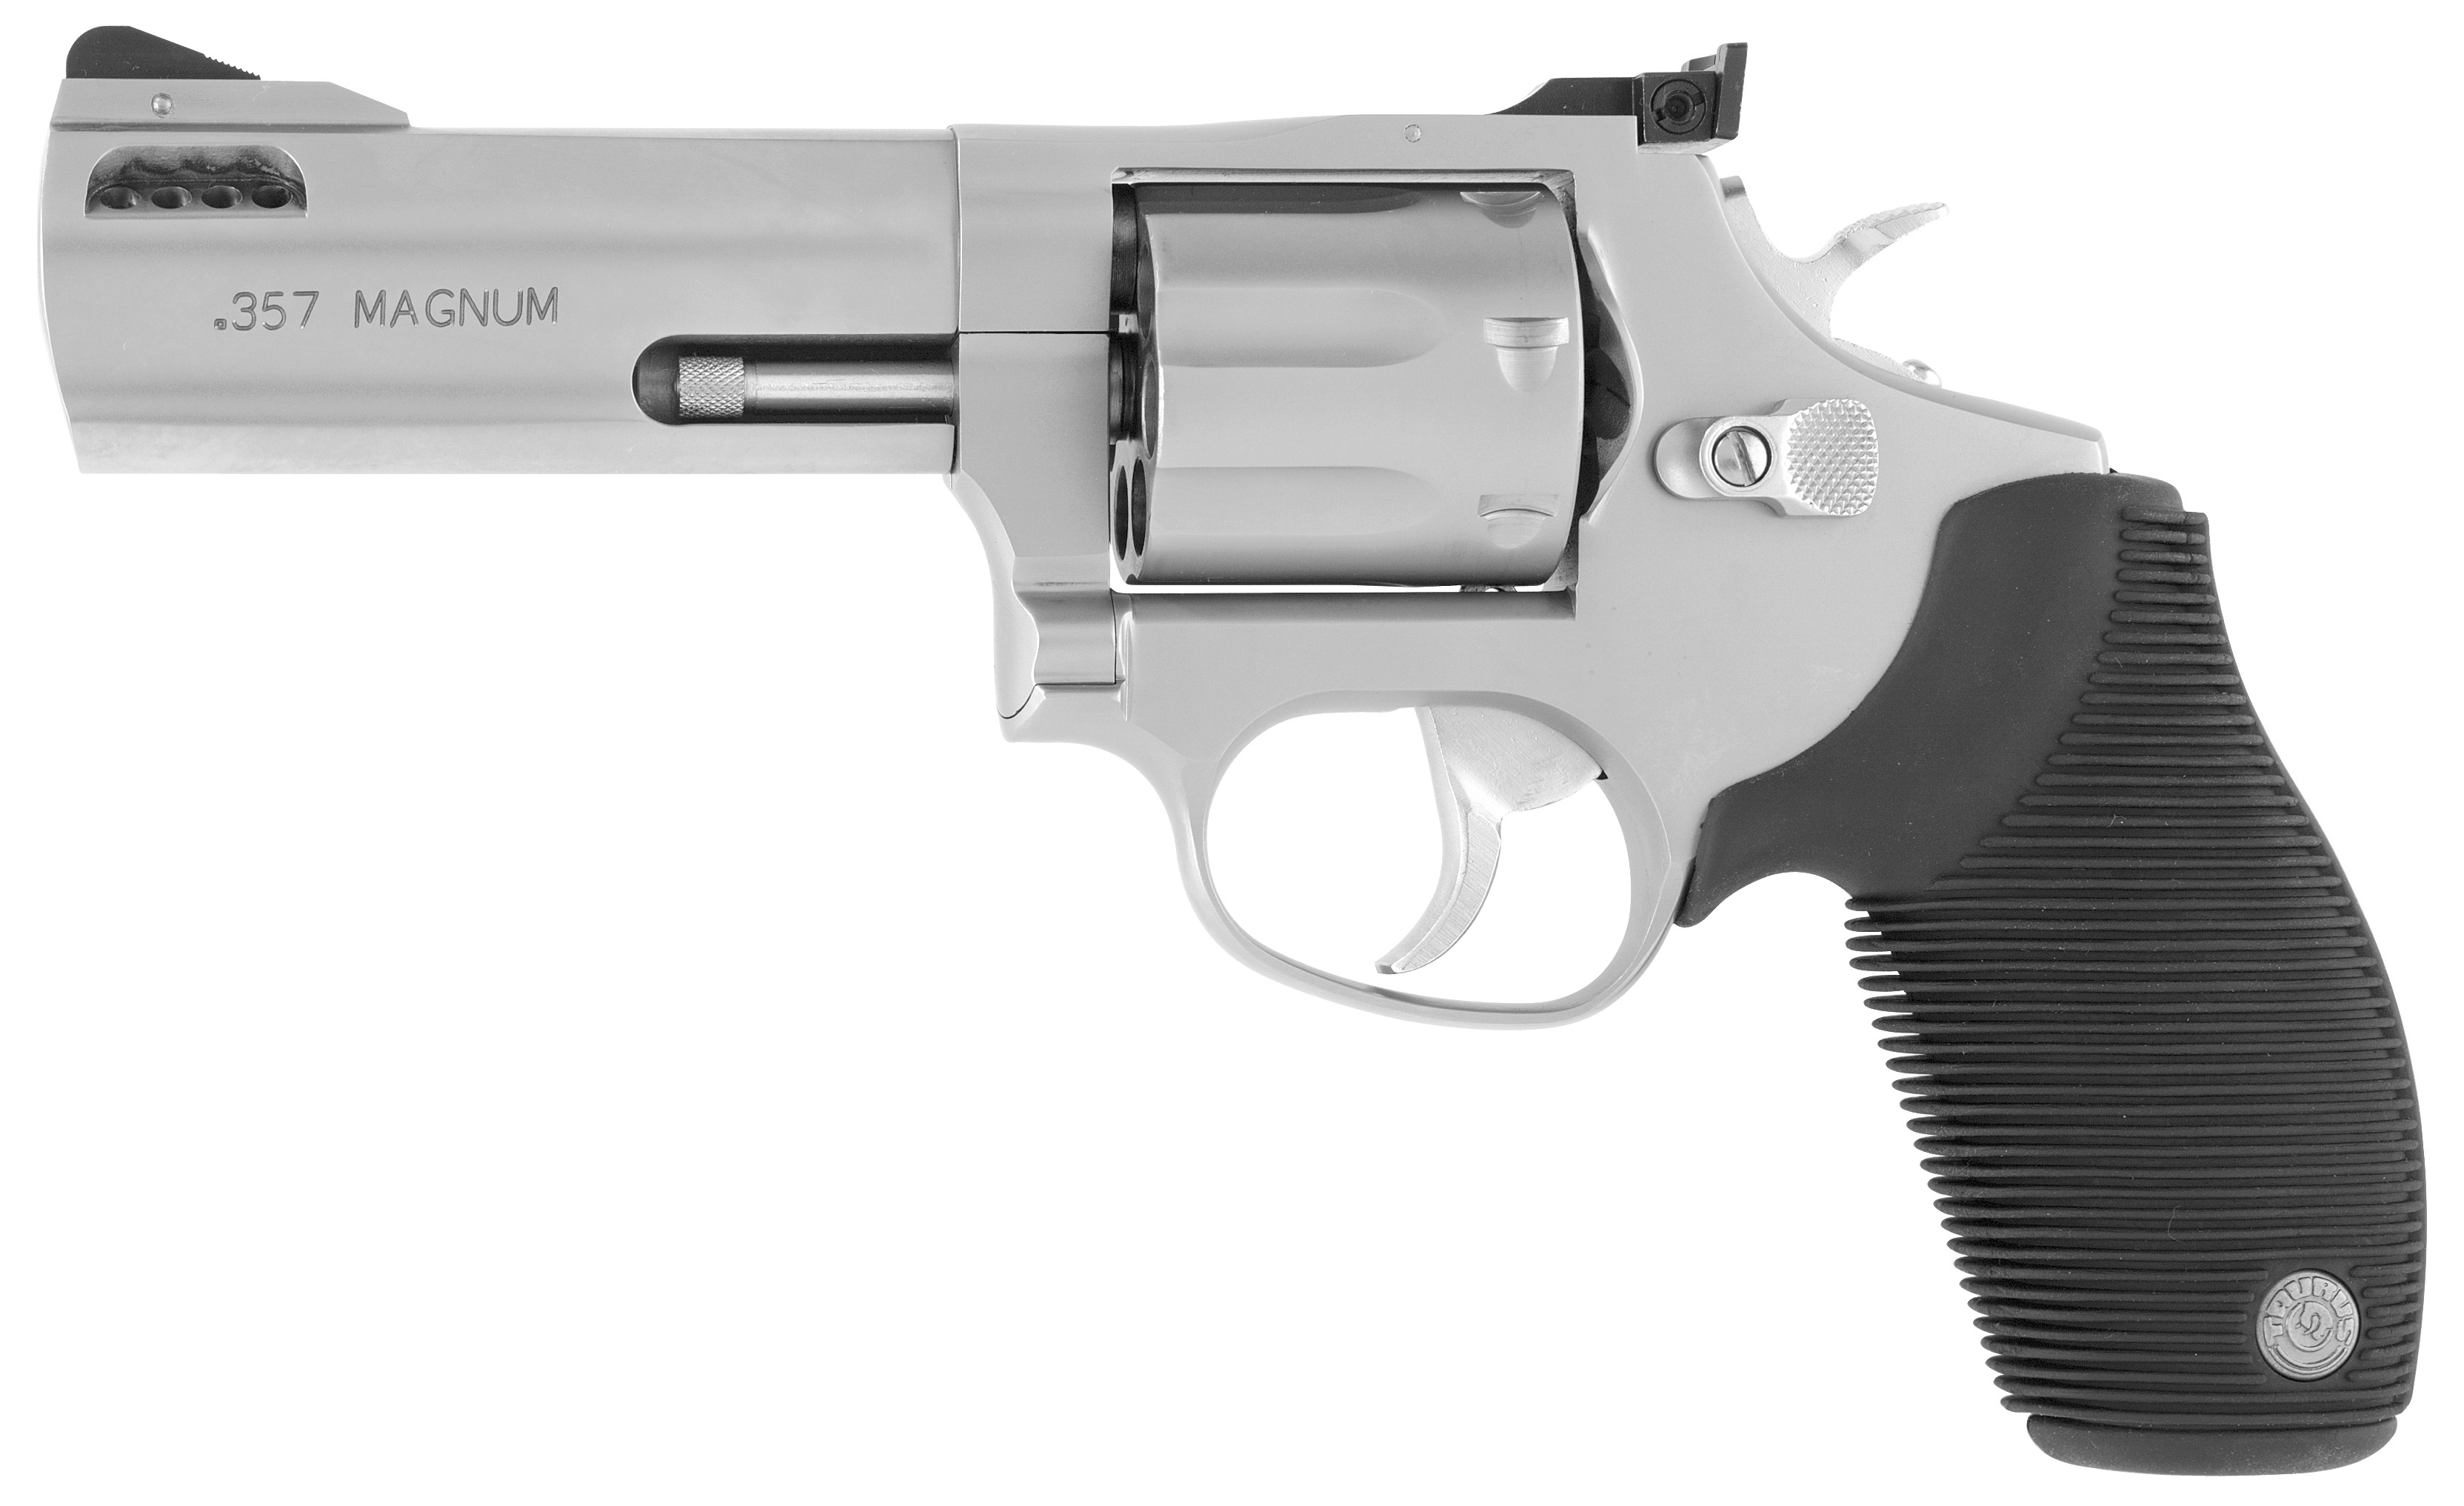 taurus-international-mfg-co-model-627-gun-values-by-gun-digest